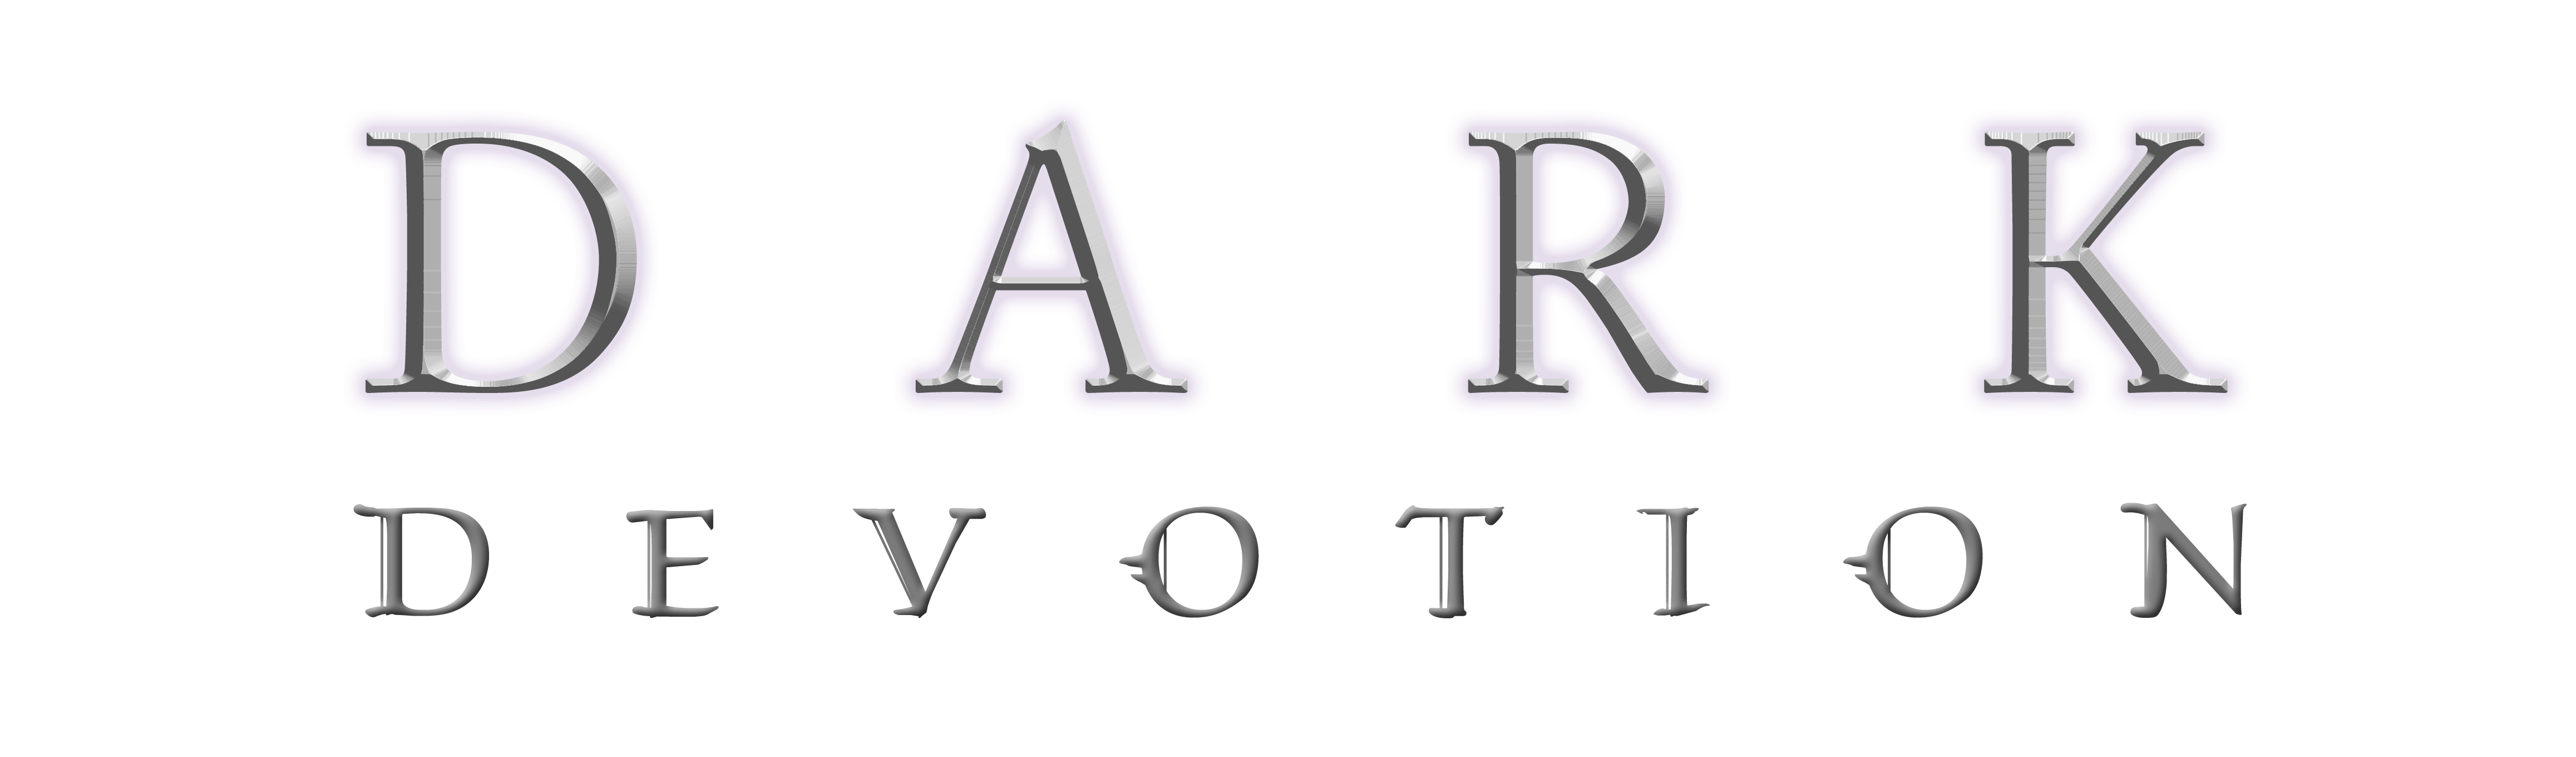 Dark Devotion - Logo 1 [logo.png]